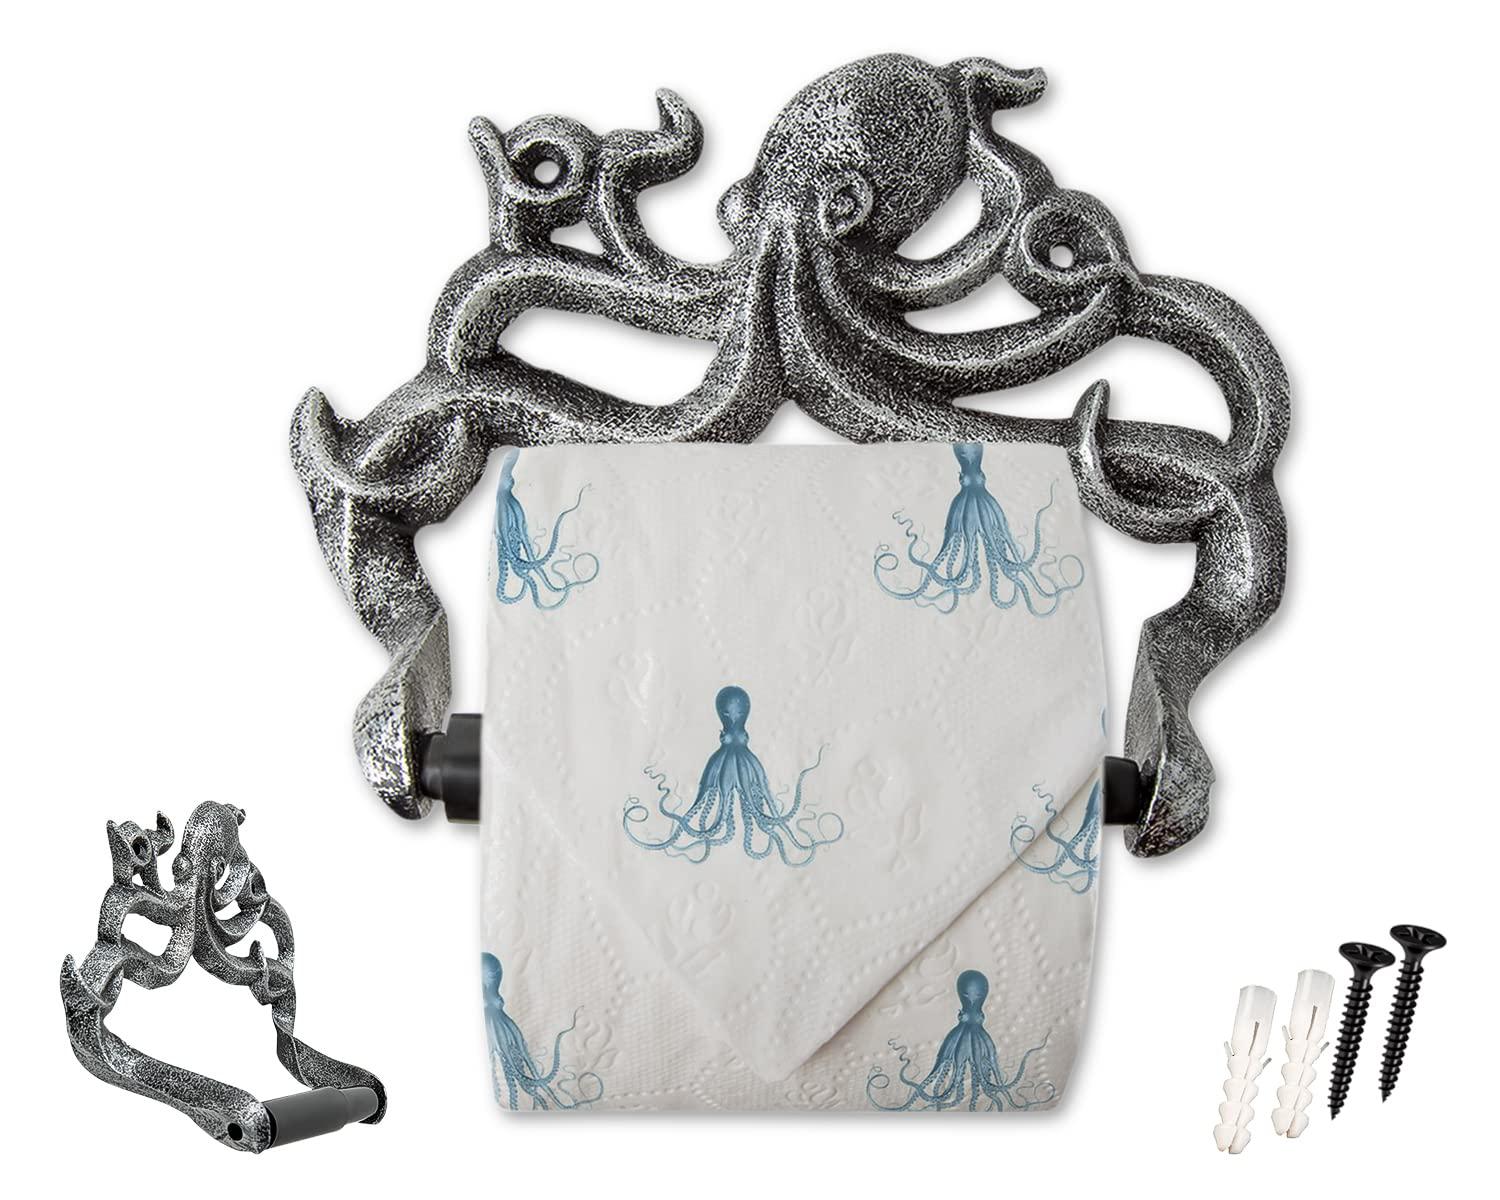 Comfify decorative cast iron octopus toilet paper roll holder - wall mounted octopus dcor for bathroom - kraken, nautical bathroom ac